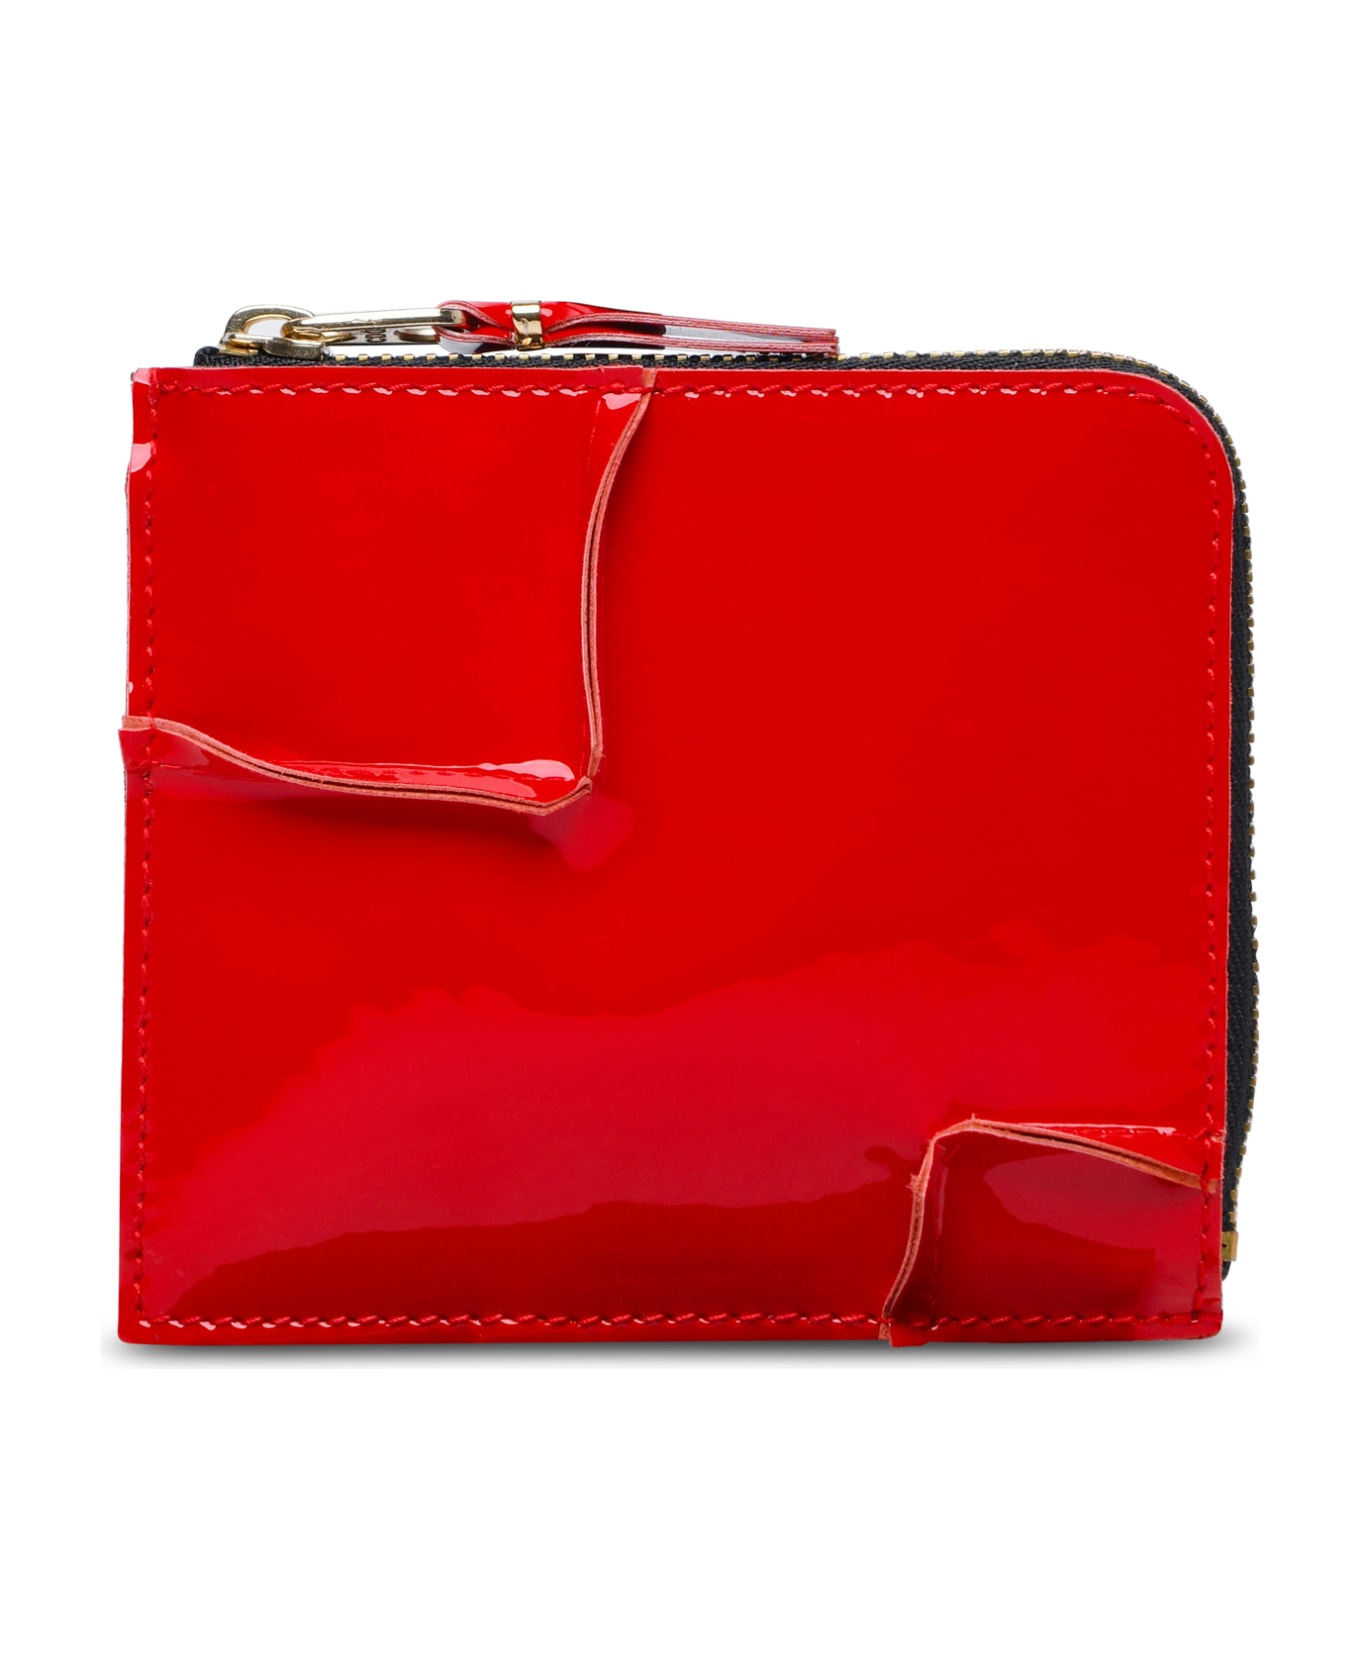 Comme des Garçons Wallet 'medley' Red Leather Wallet - Red 財布